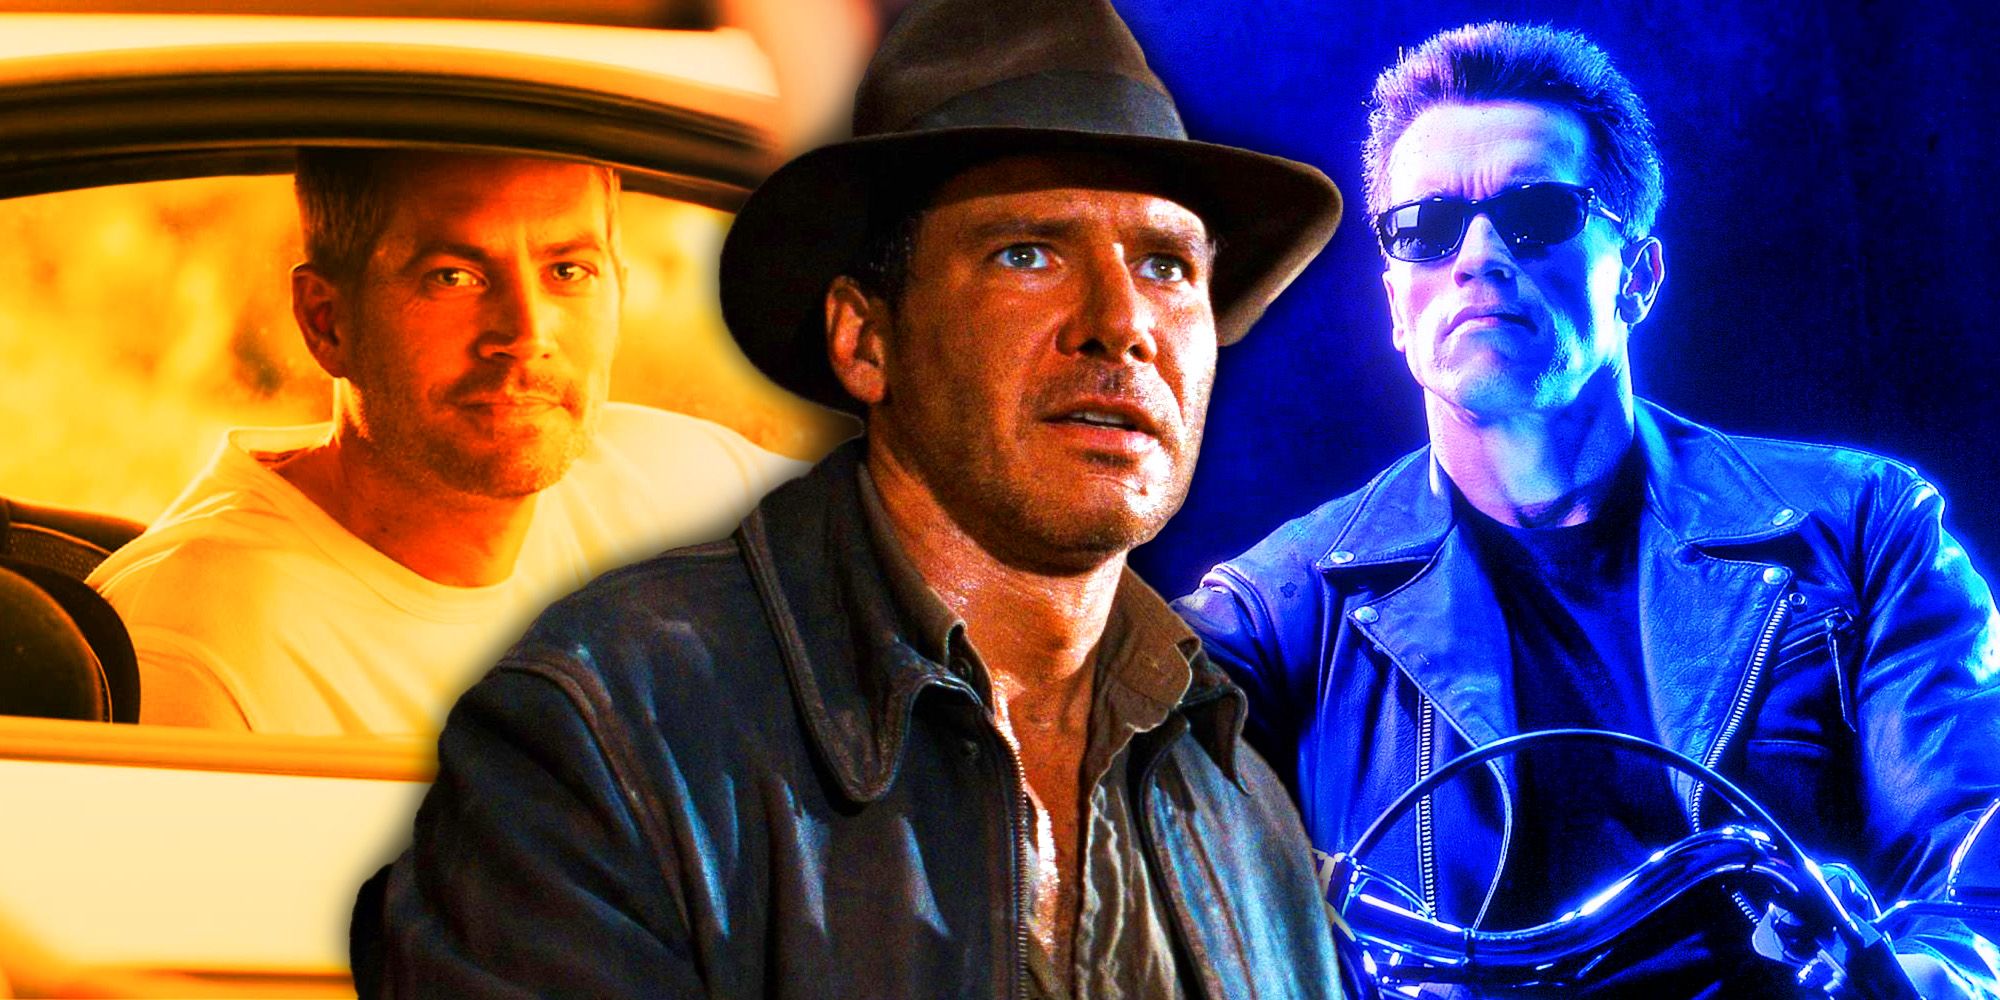 Paul Walker in Fast and Furious Indiana Jones and Arnold Schwarzenegger in Terminator